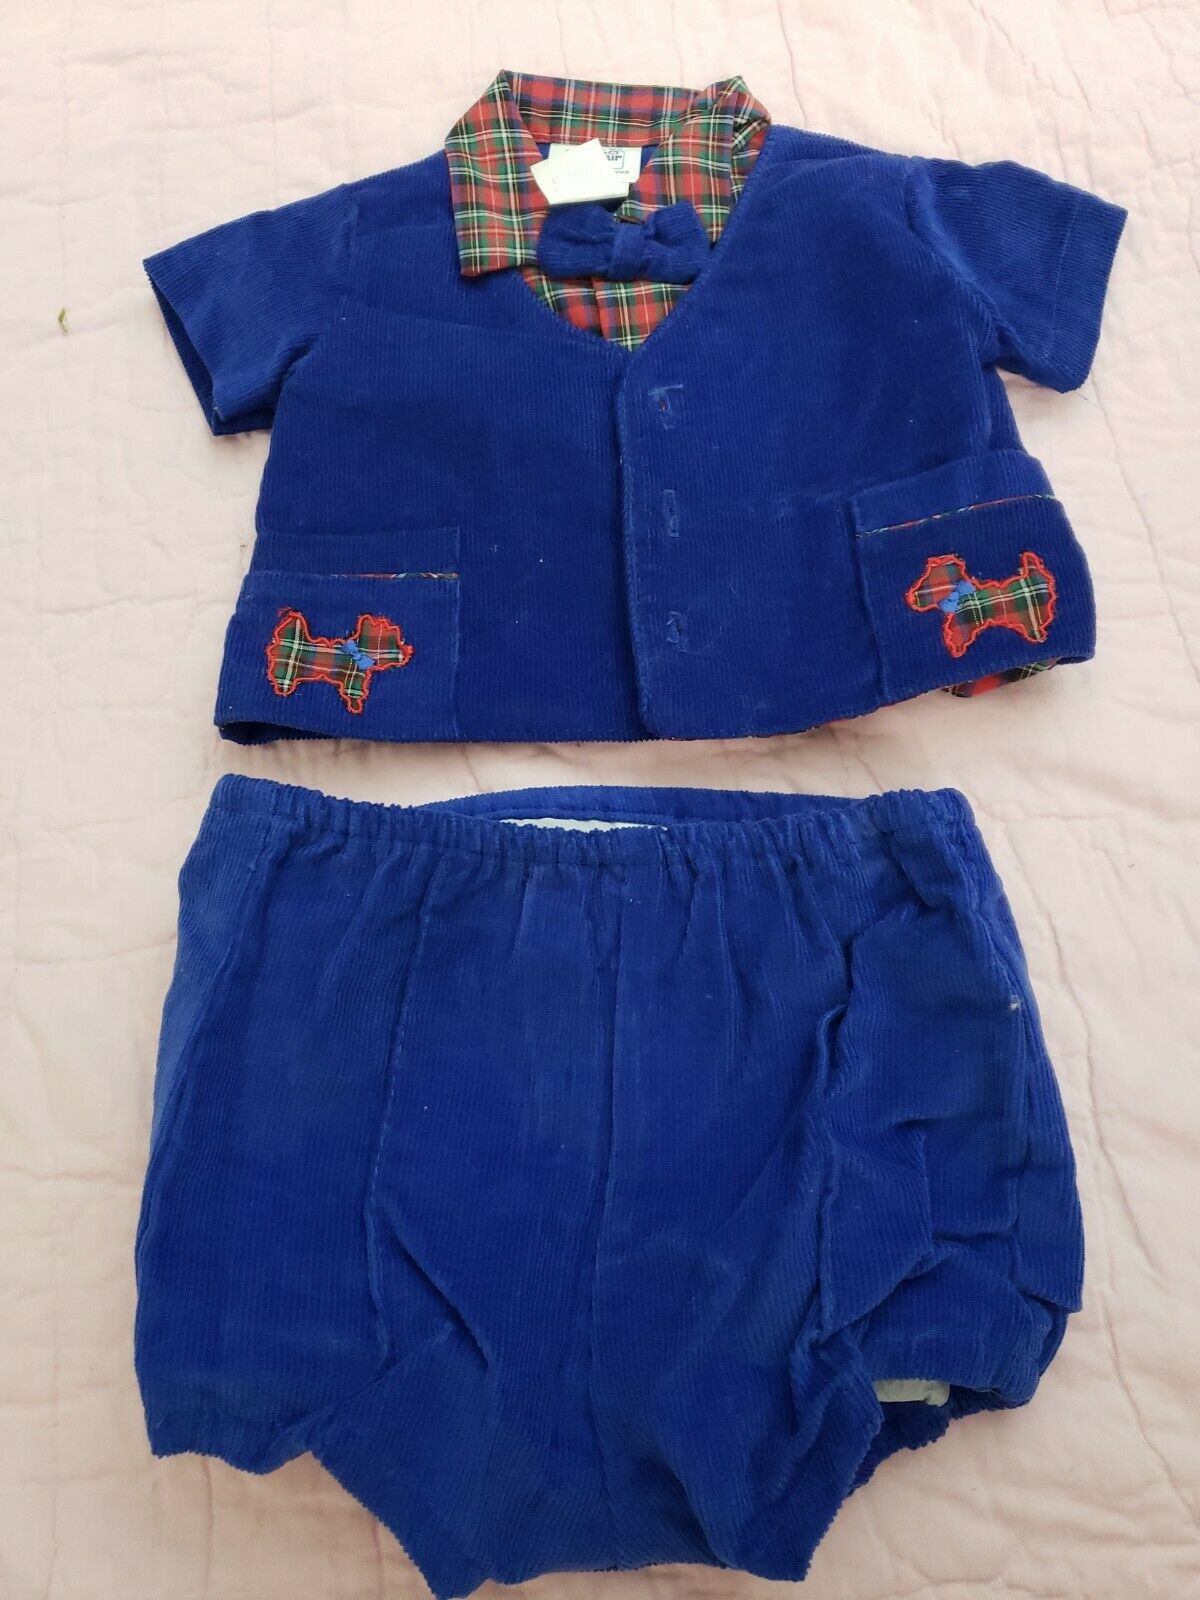 Vtg Nos Infant Baby Boy Newborn Mayfair Blue Suit Tie Outfit Diaper Cover 80s